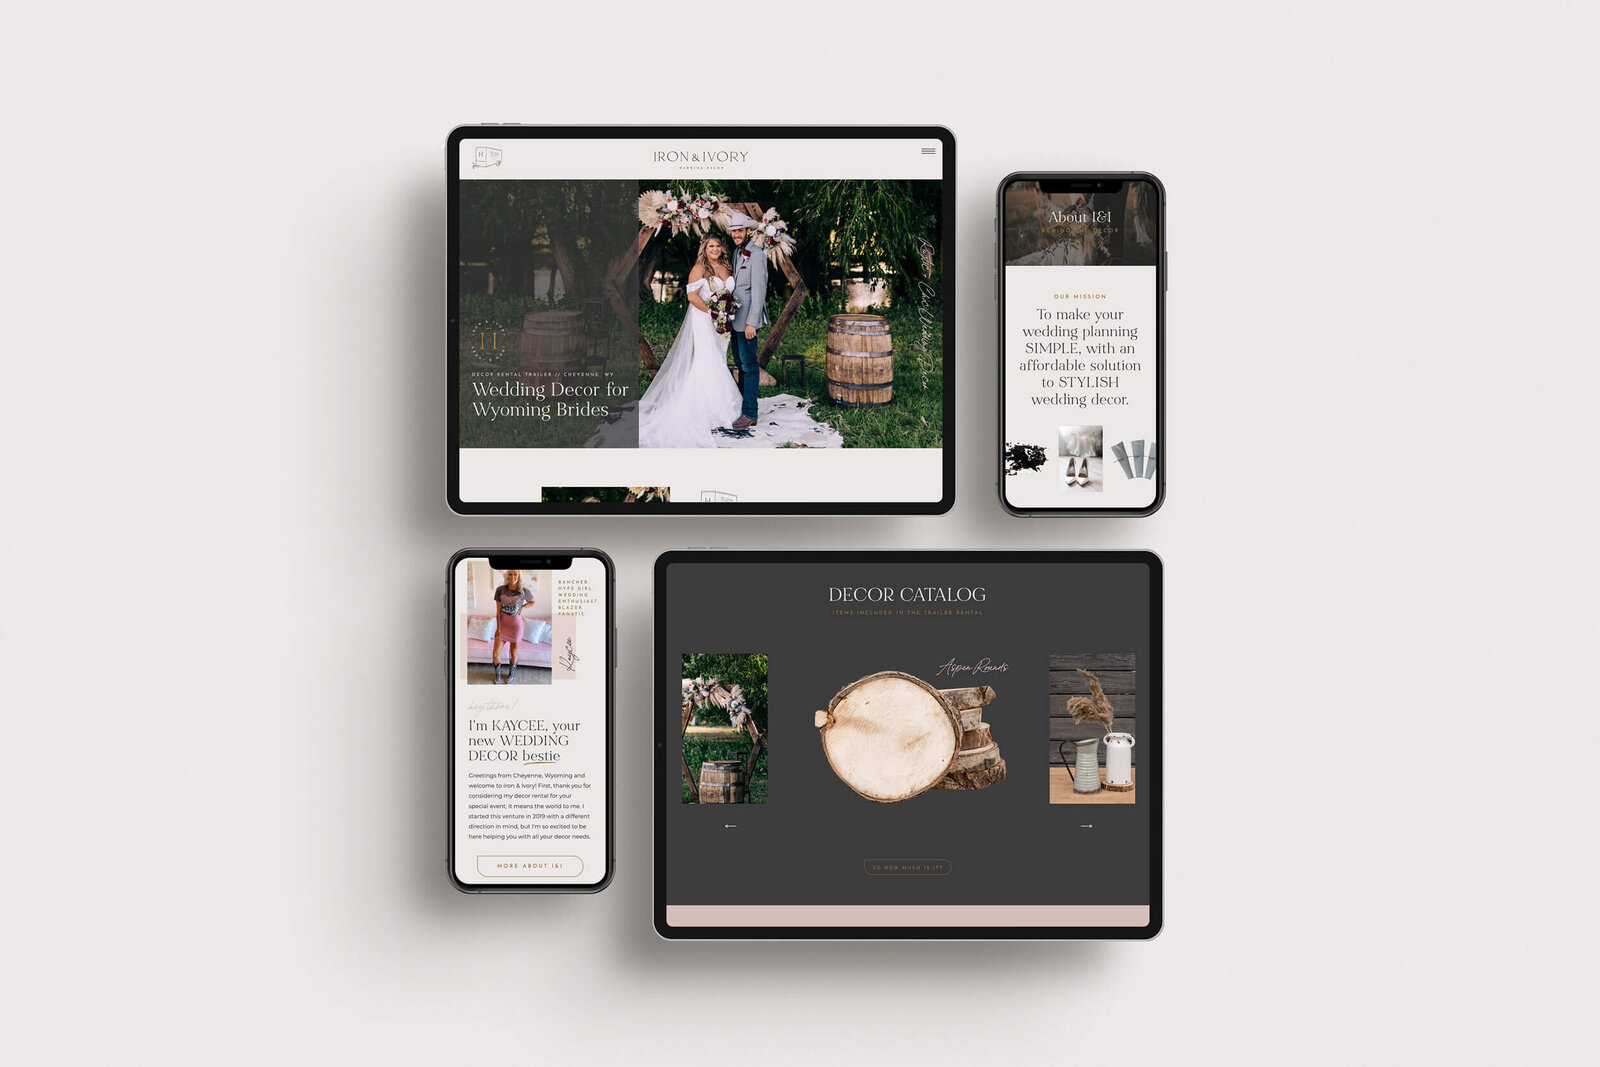 iron-and-ivory-weddings-website-design